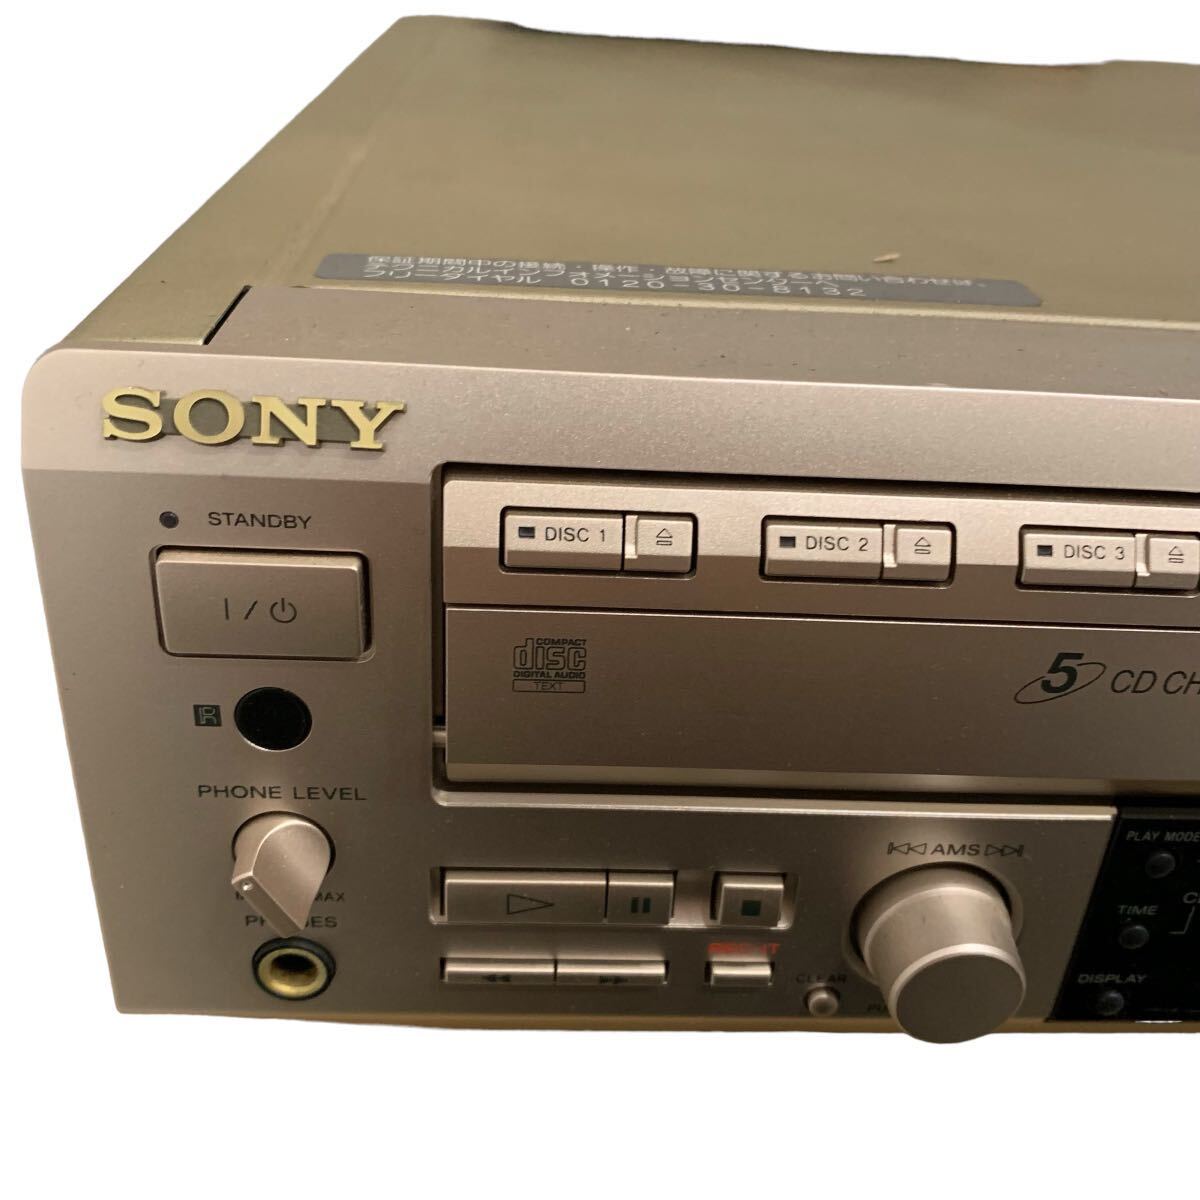 SONY MXD-D5C Sony MD recorder MD deck one body deck electrification 0 1 jpy ~